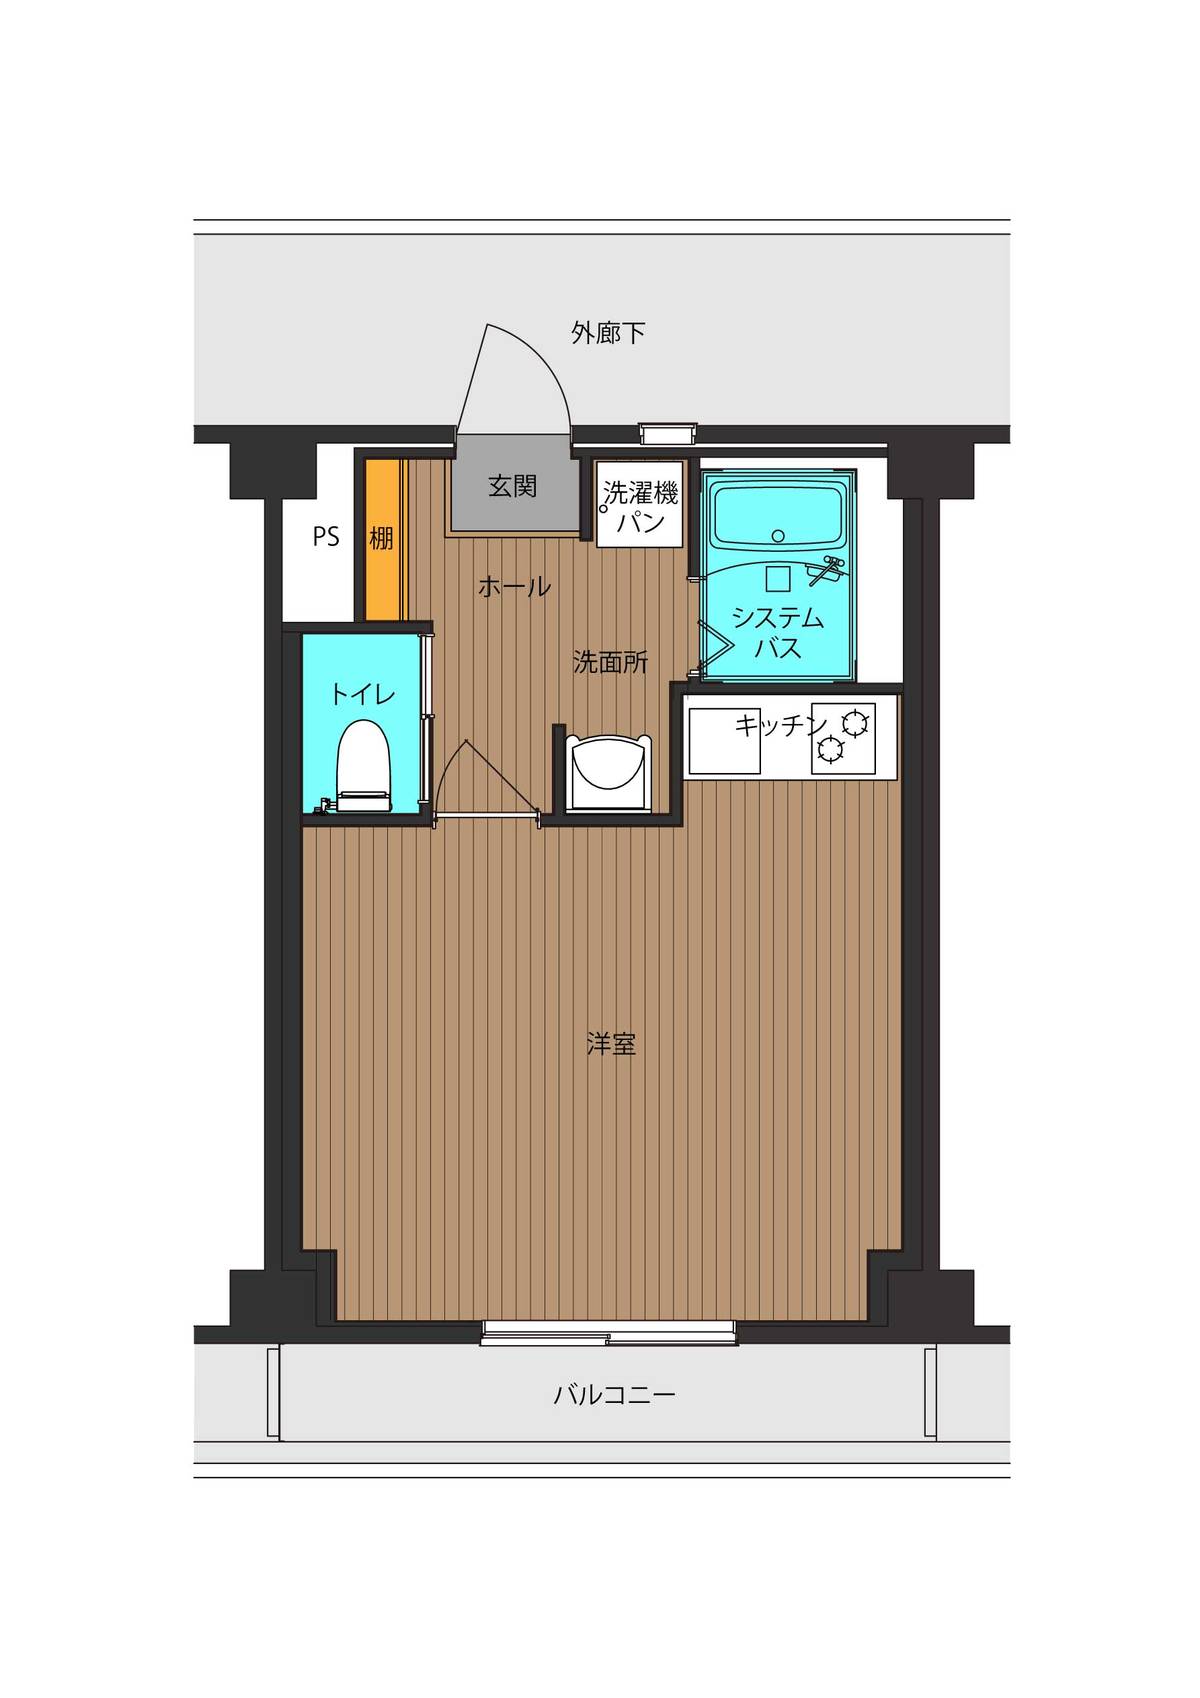 1R floorplan of Village House Onoda in Sanyoonoda-shi